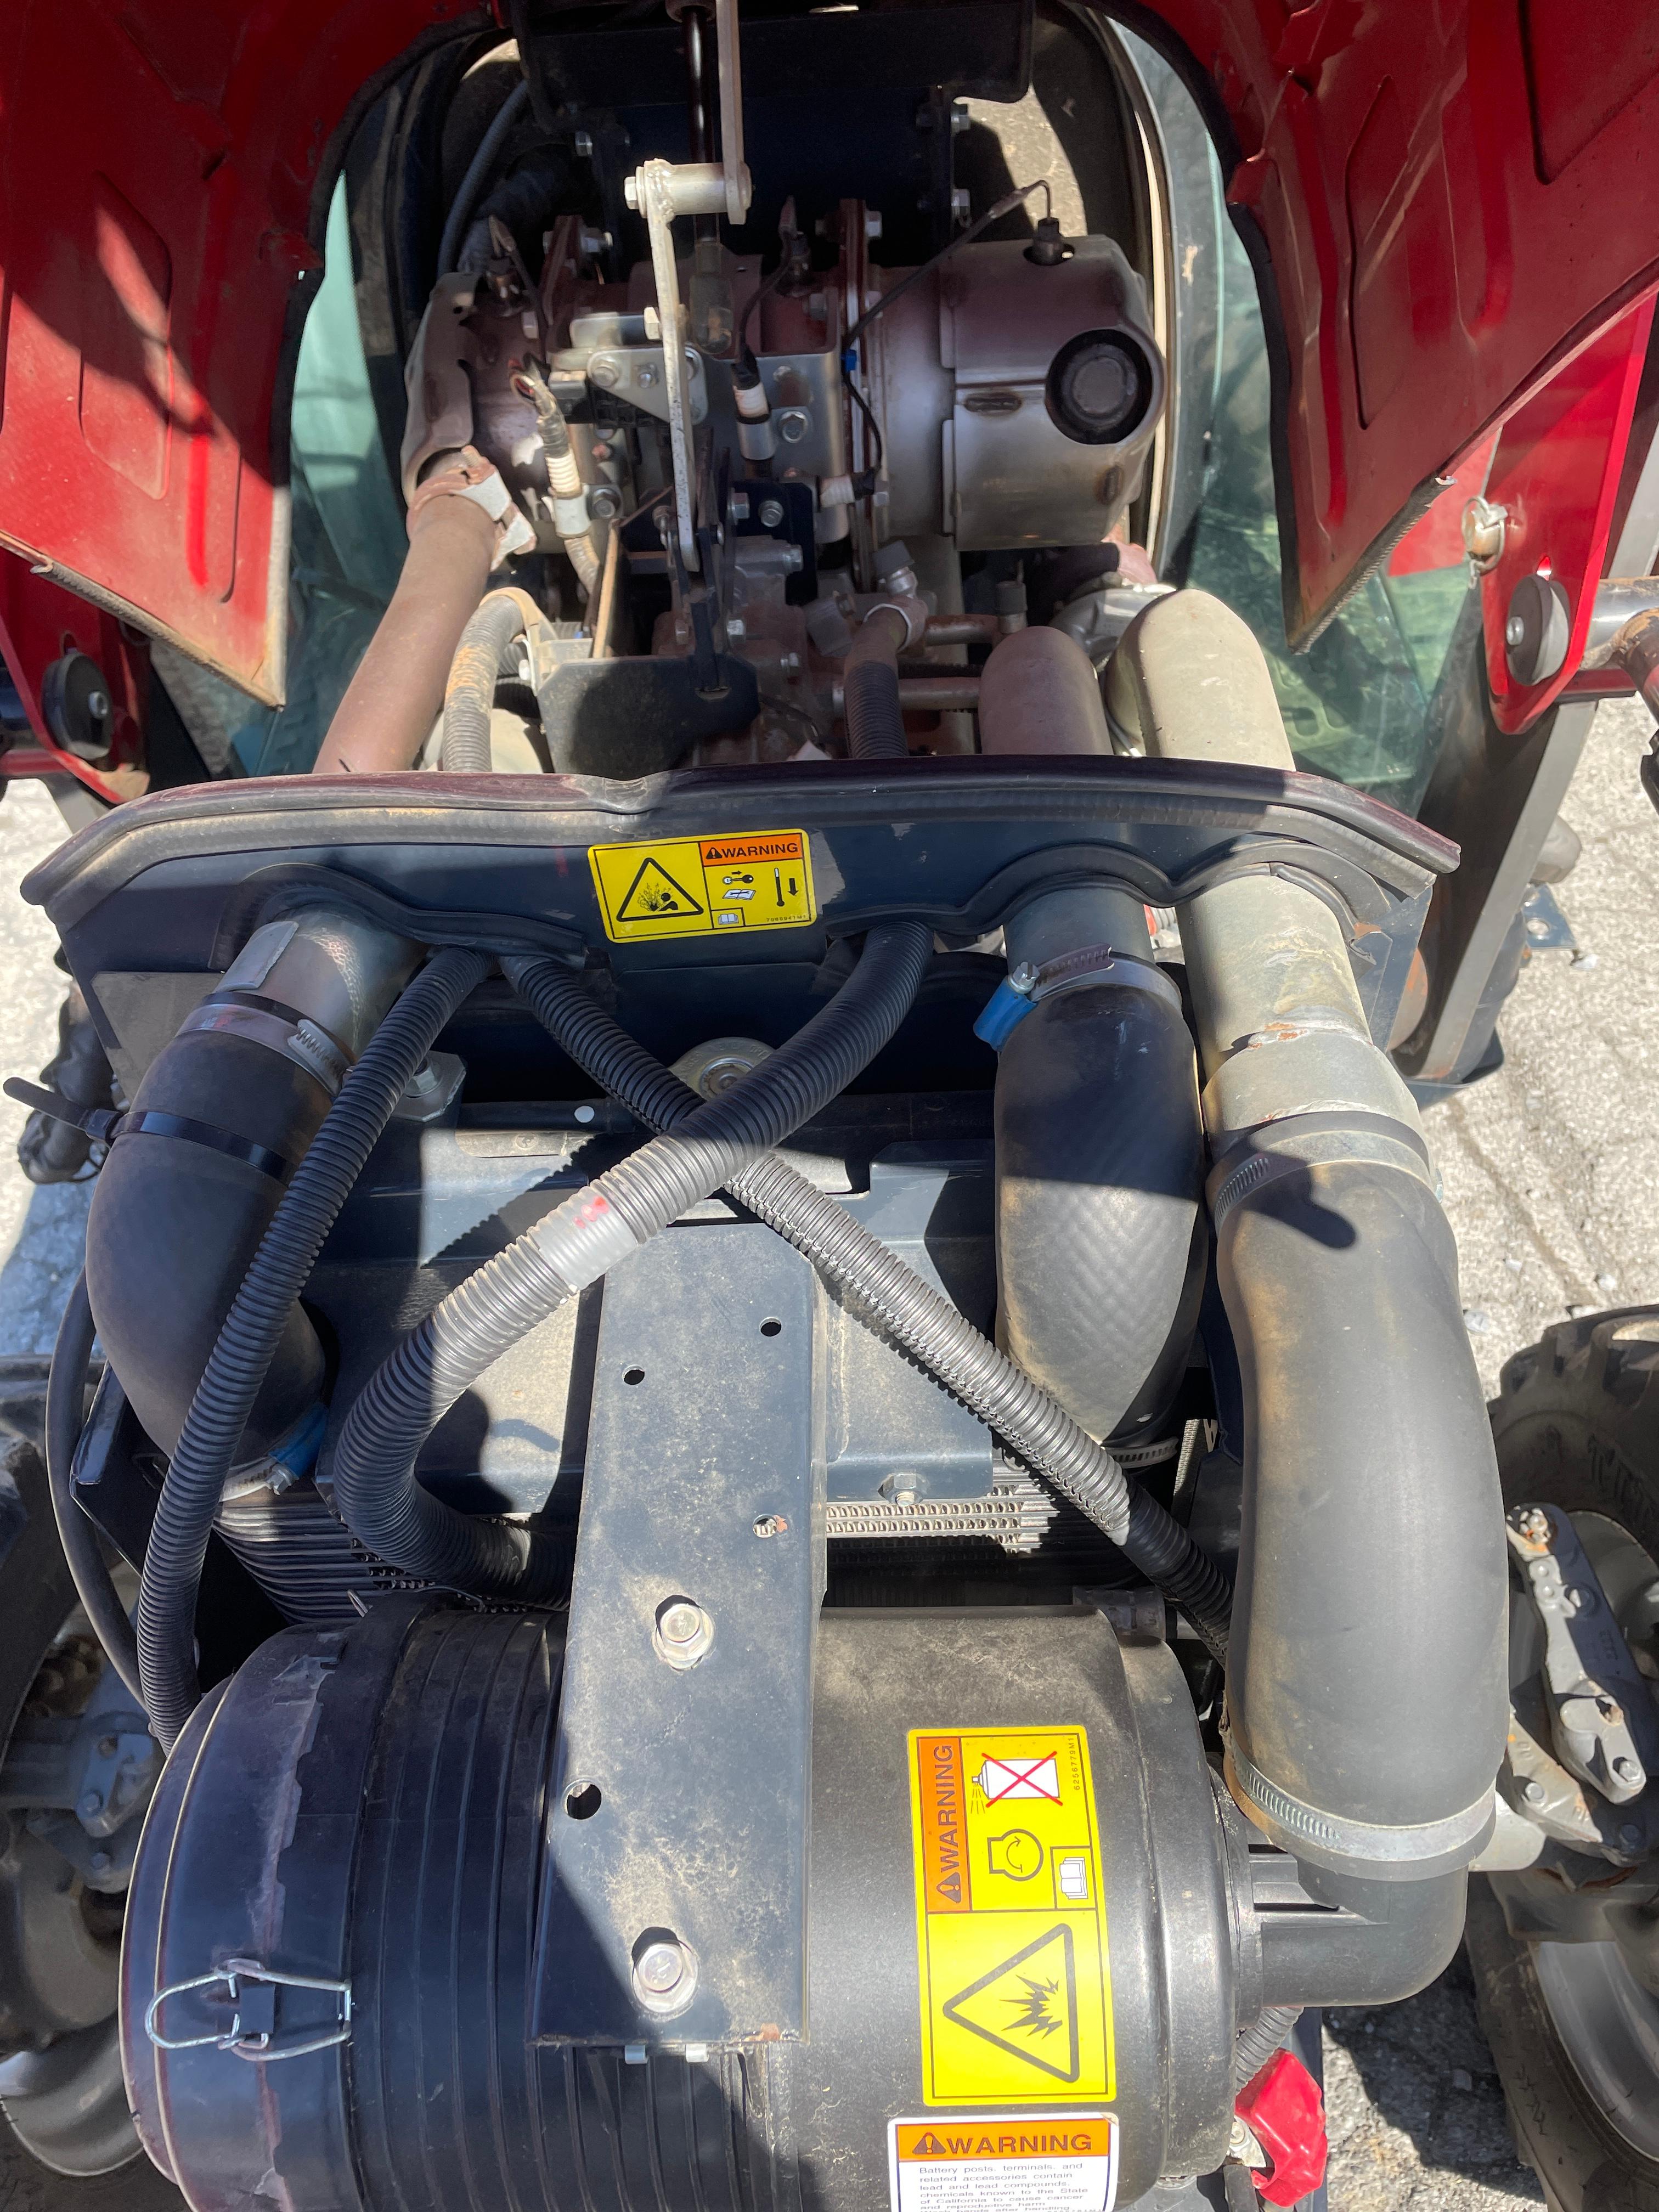 2019 Massey Ferguson 1749 4X4 Tractor W/ Loader